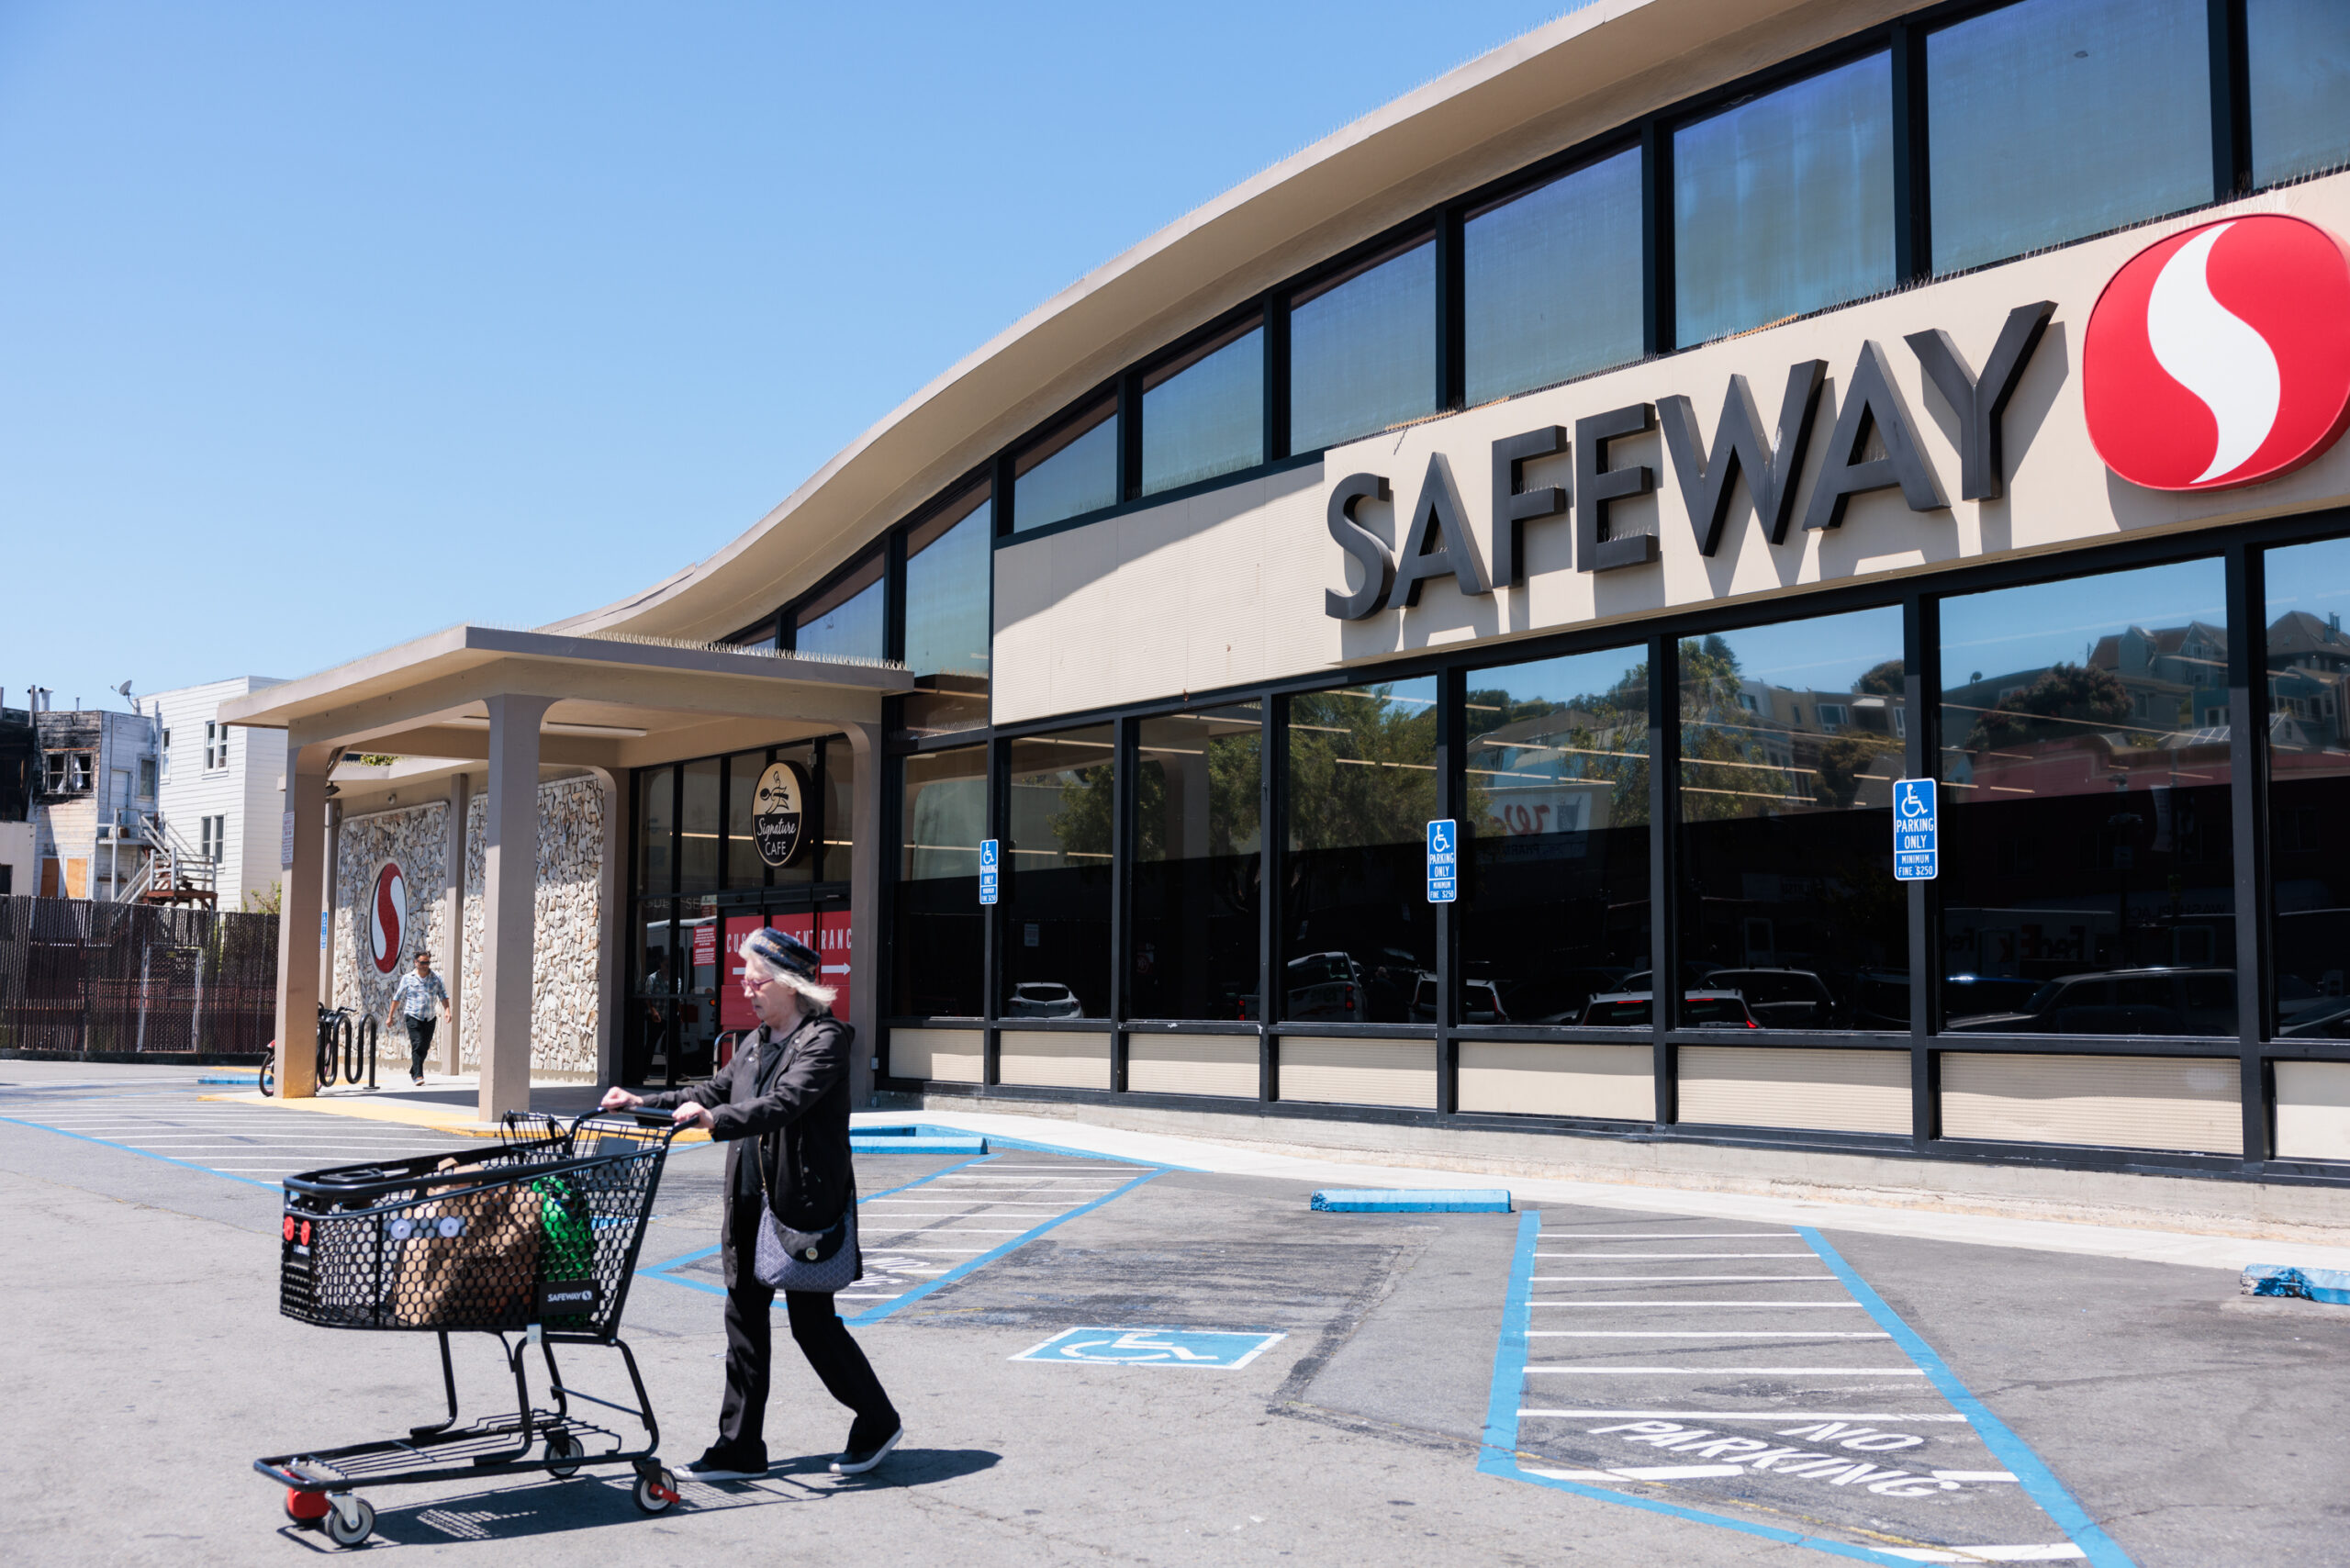 San Francisco Safeway Security Gates Fail as Rampant Theft Continues, Staff Say